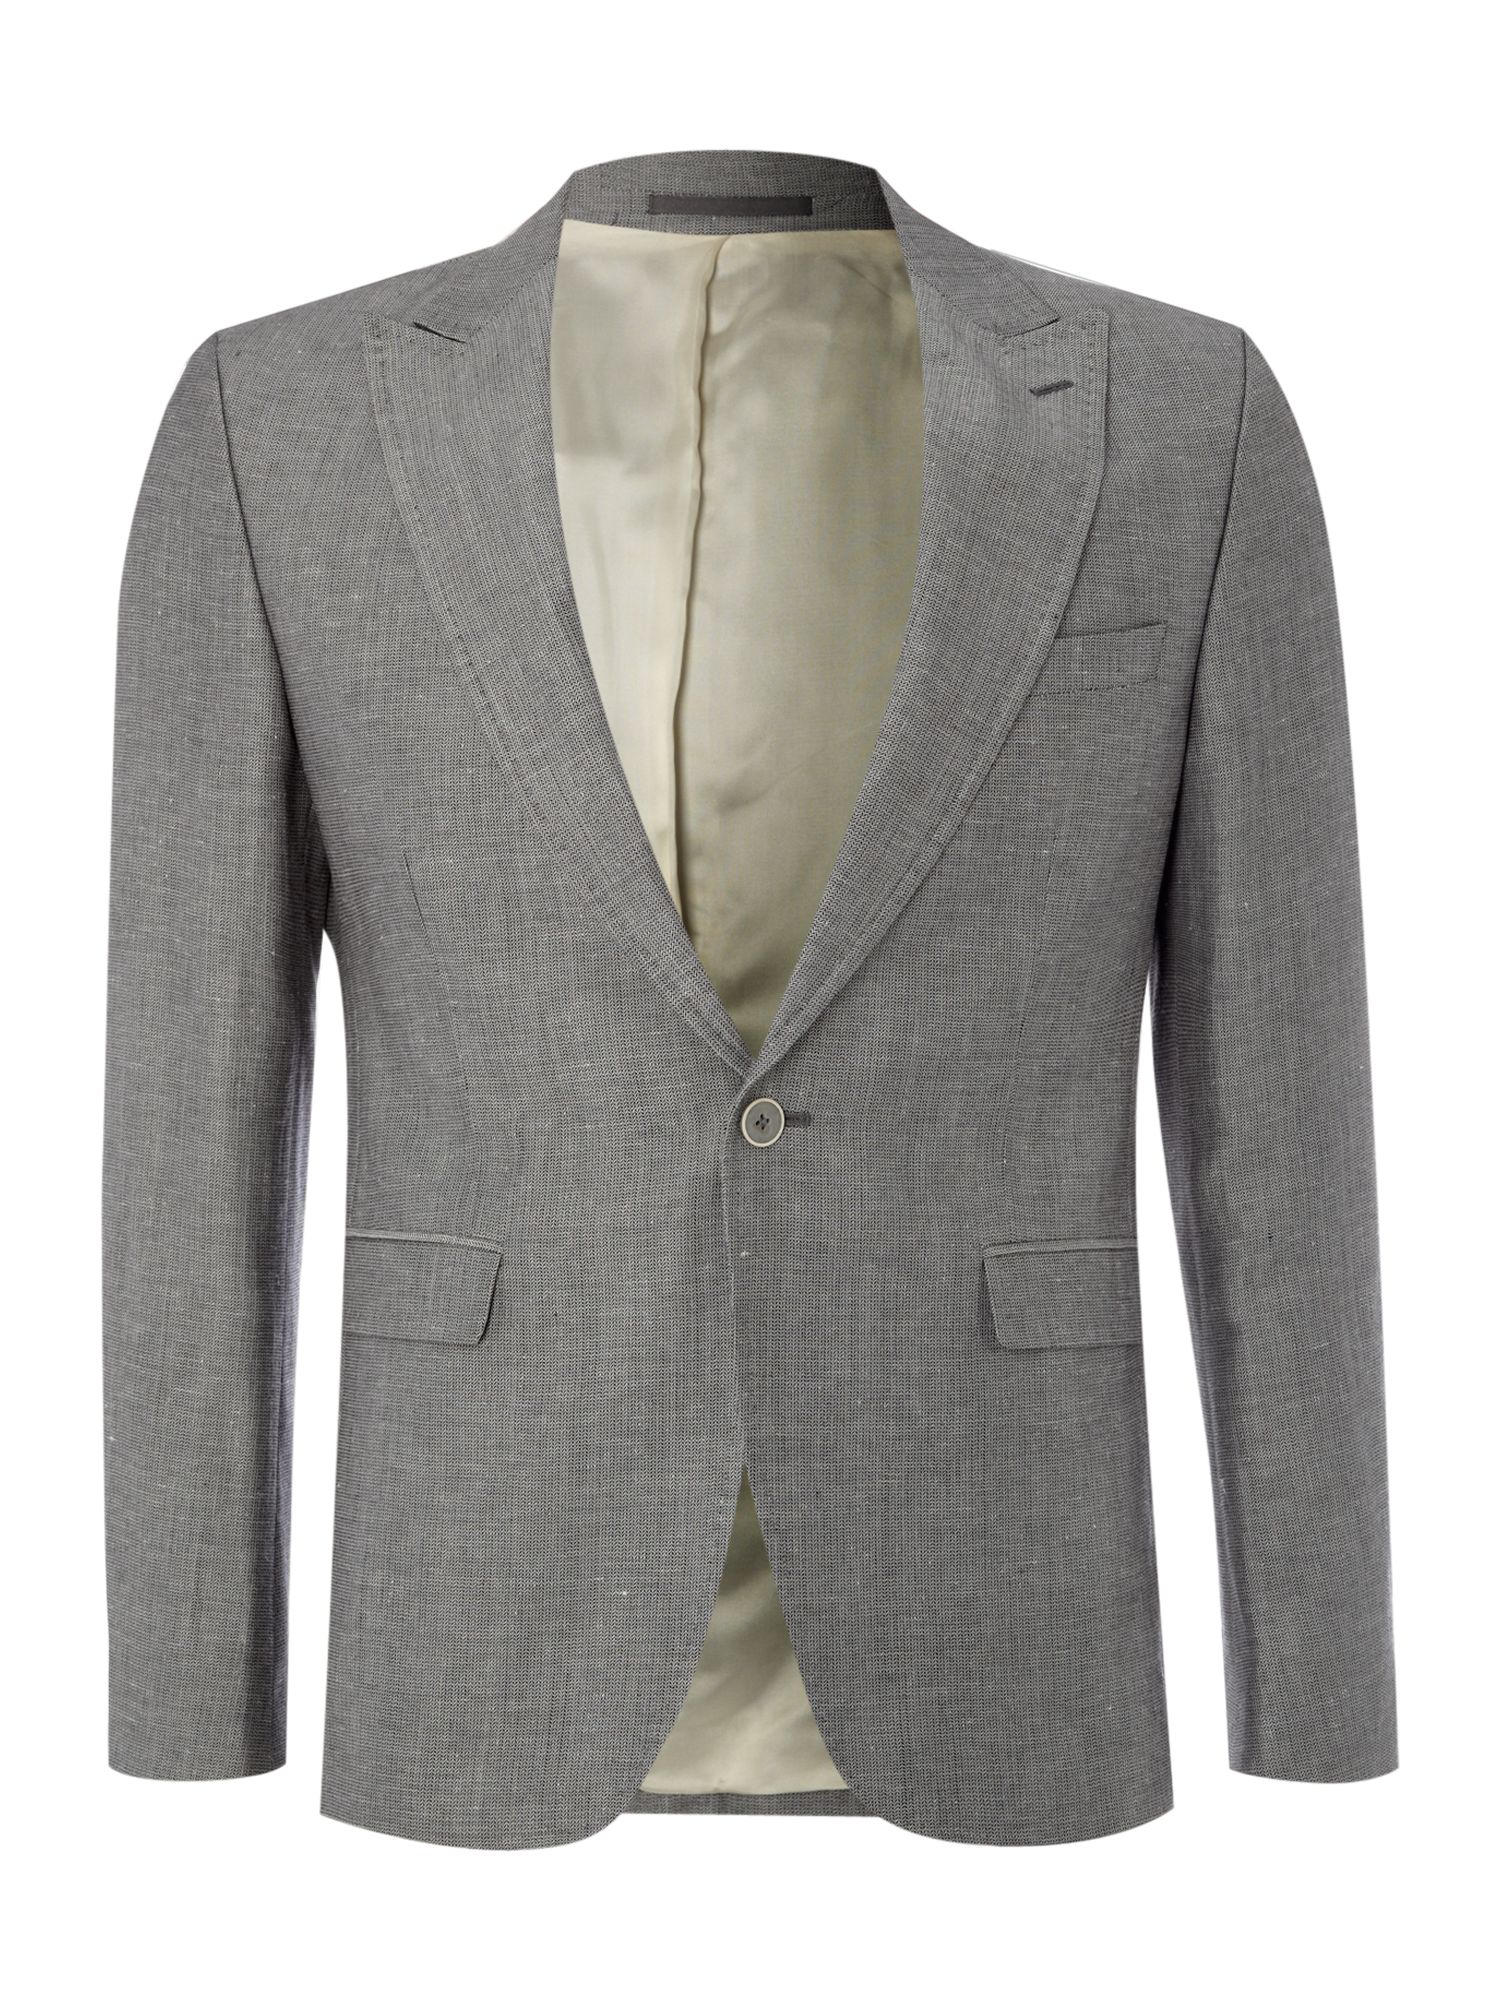 Remus Uomo Toscano Herringbone Jacket in Gray for Men (grey) | Lyst